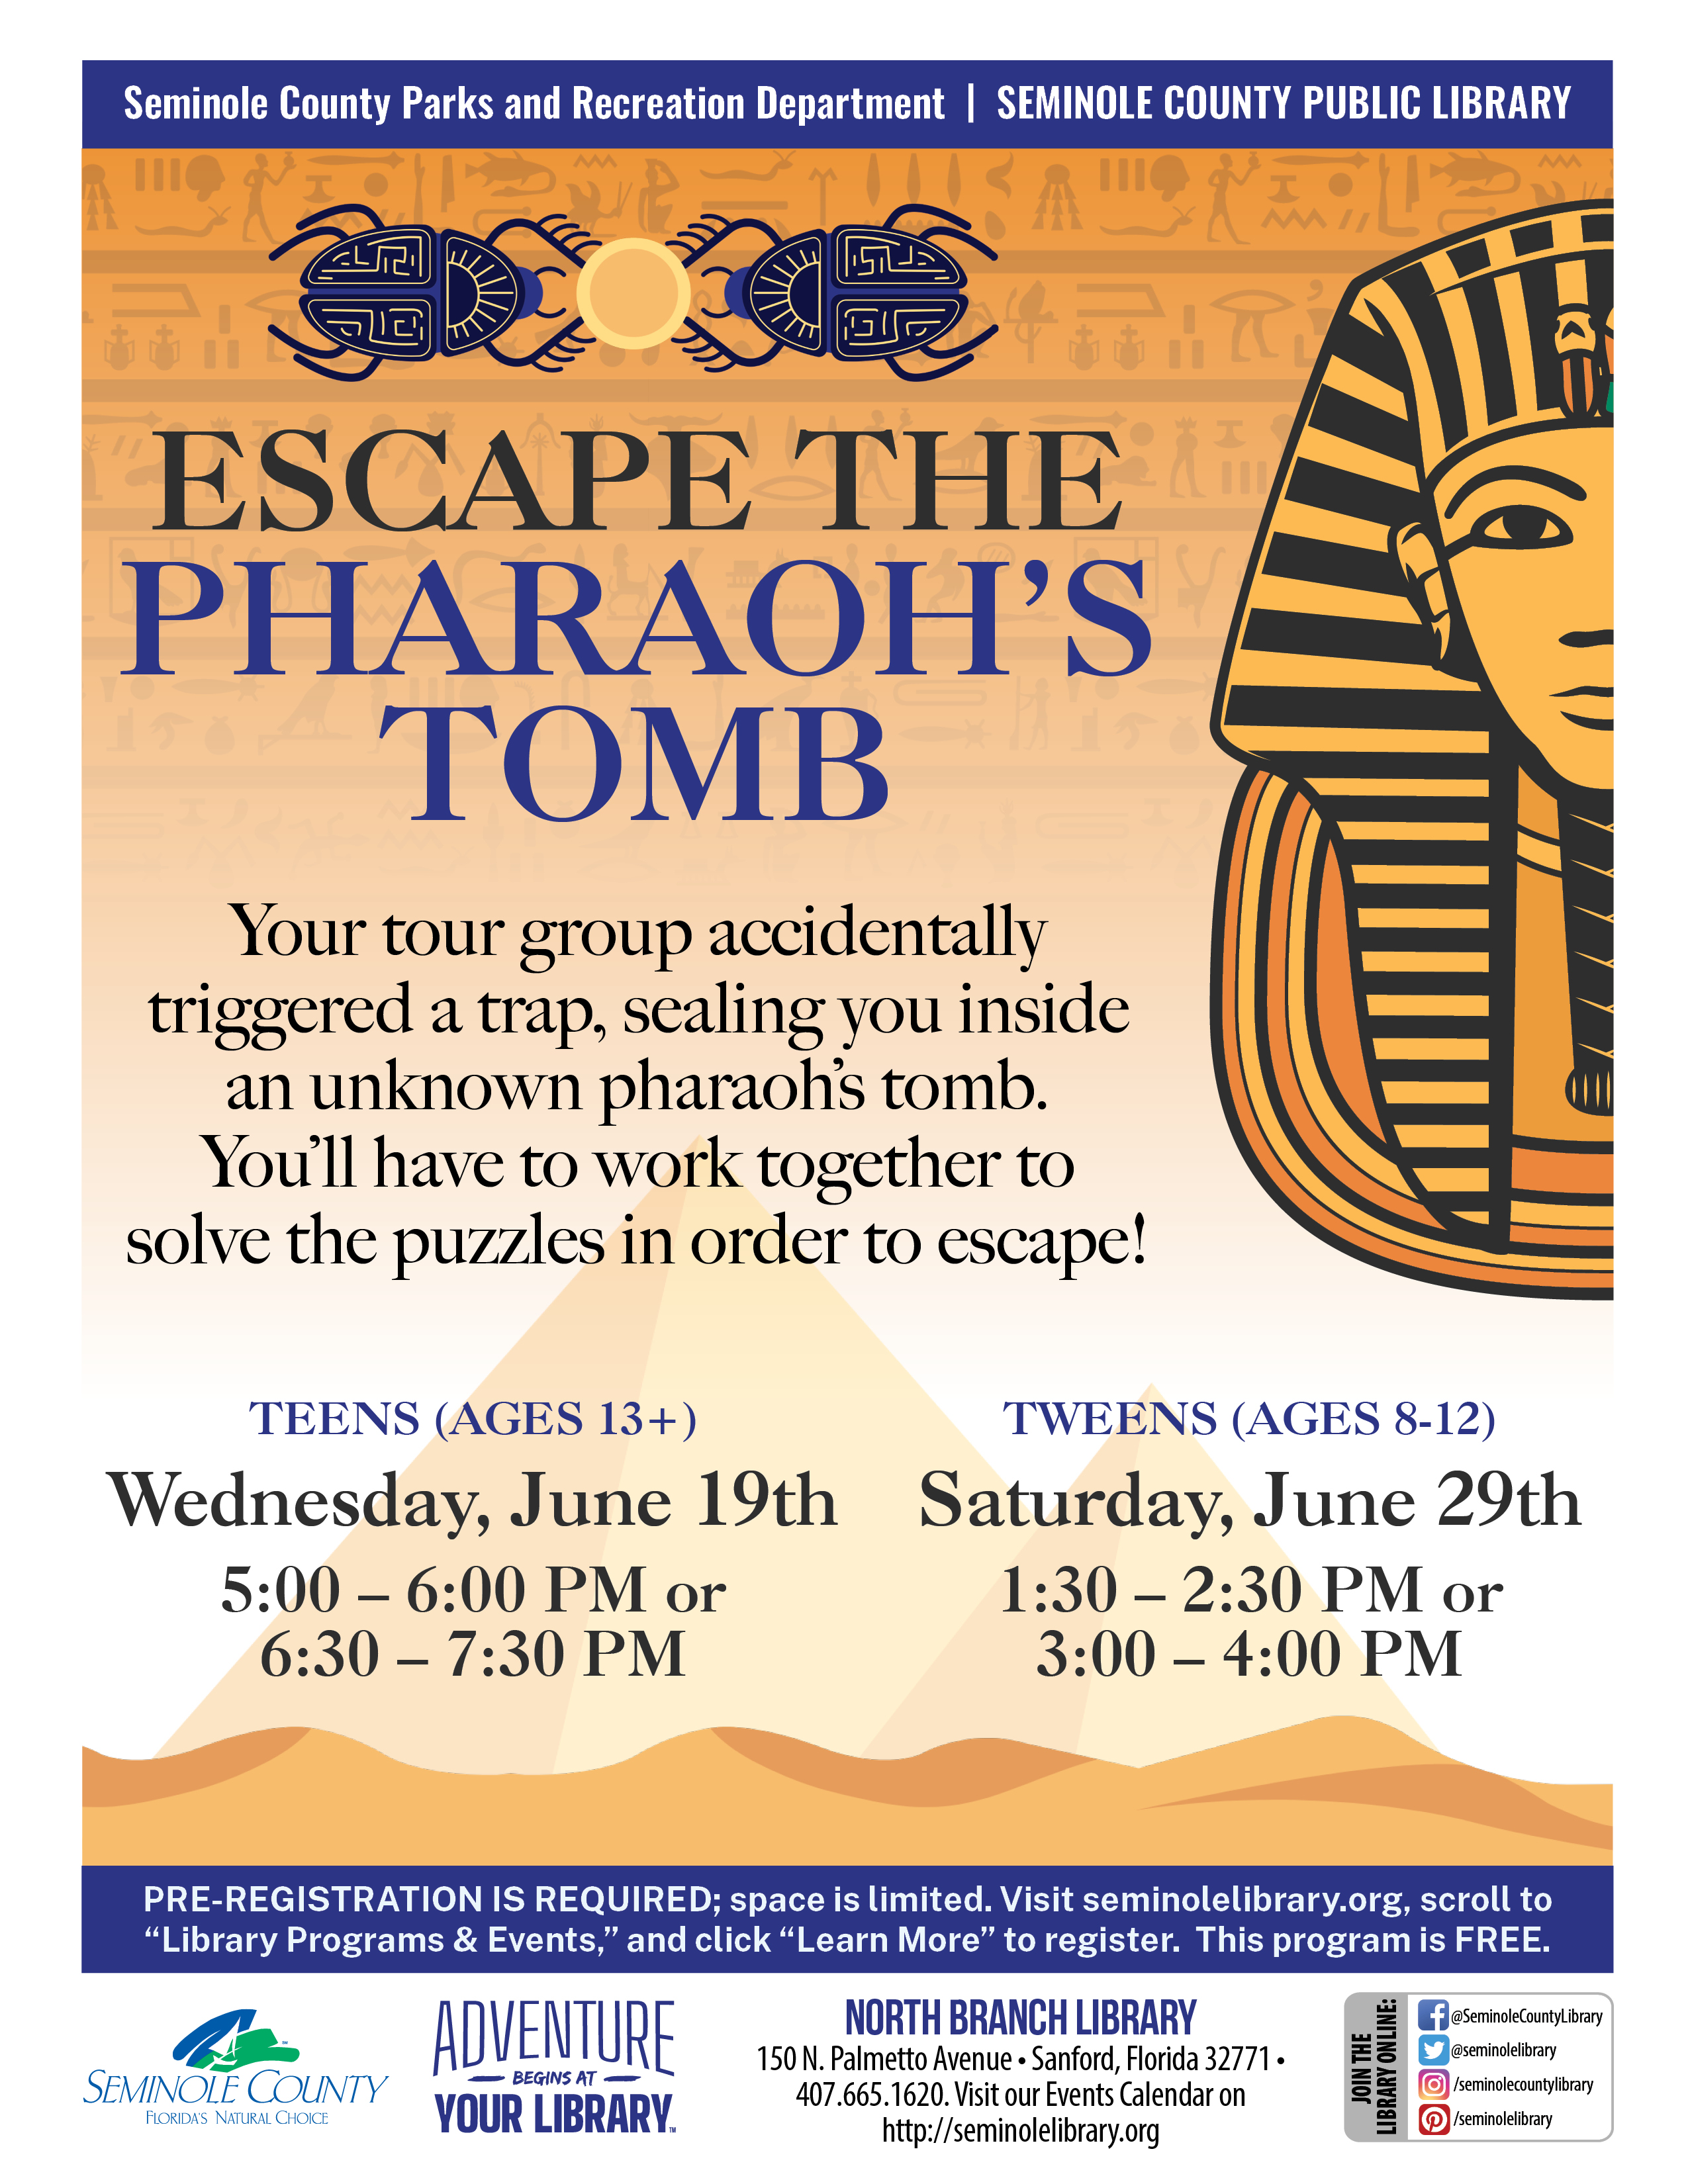 Escape the Pharaoh's Tomb - North